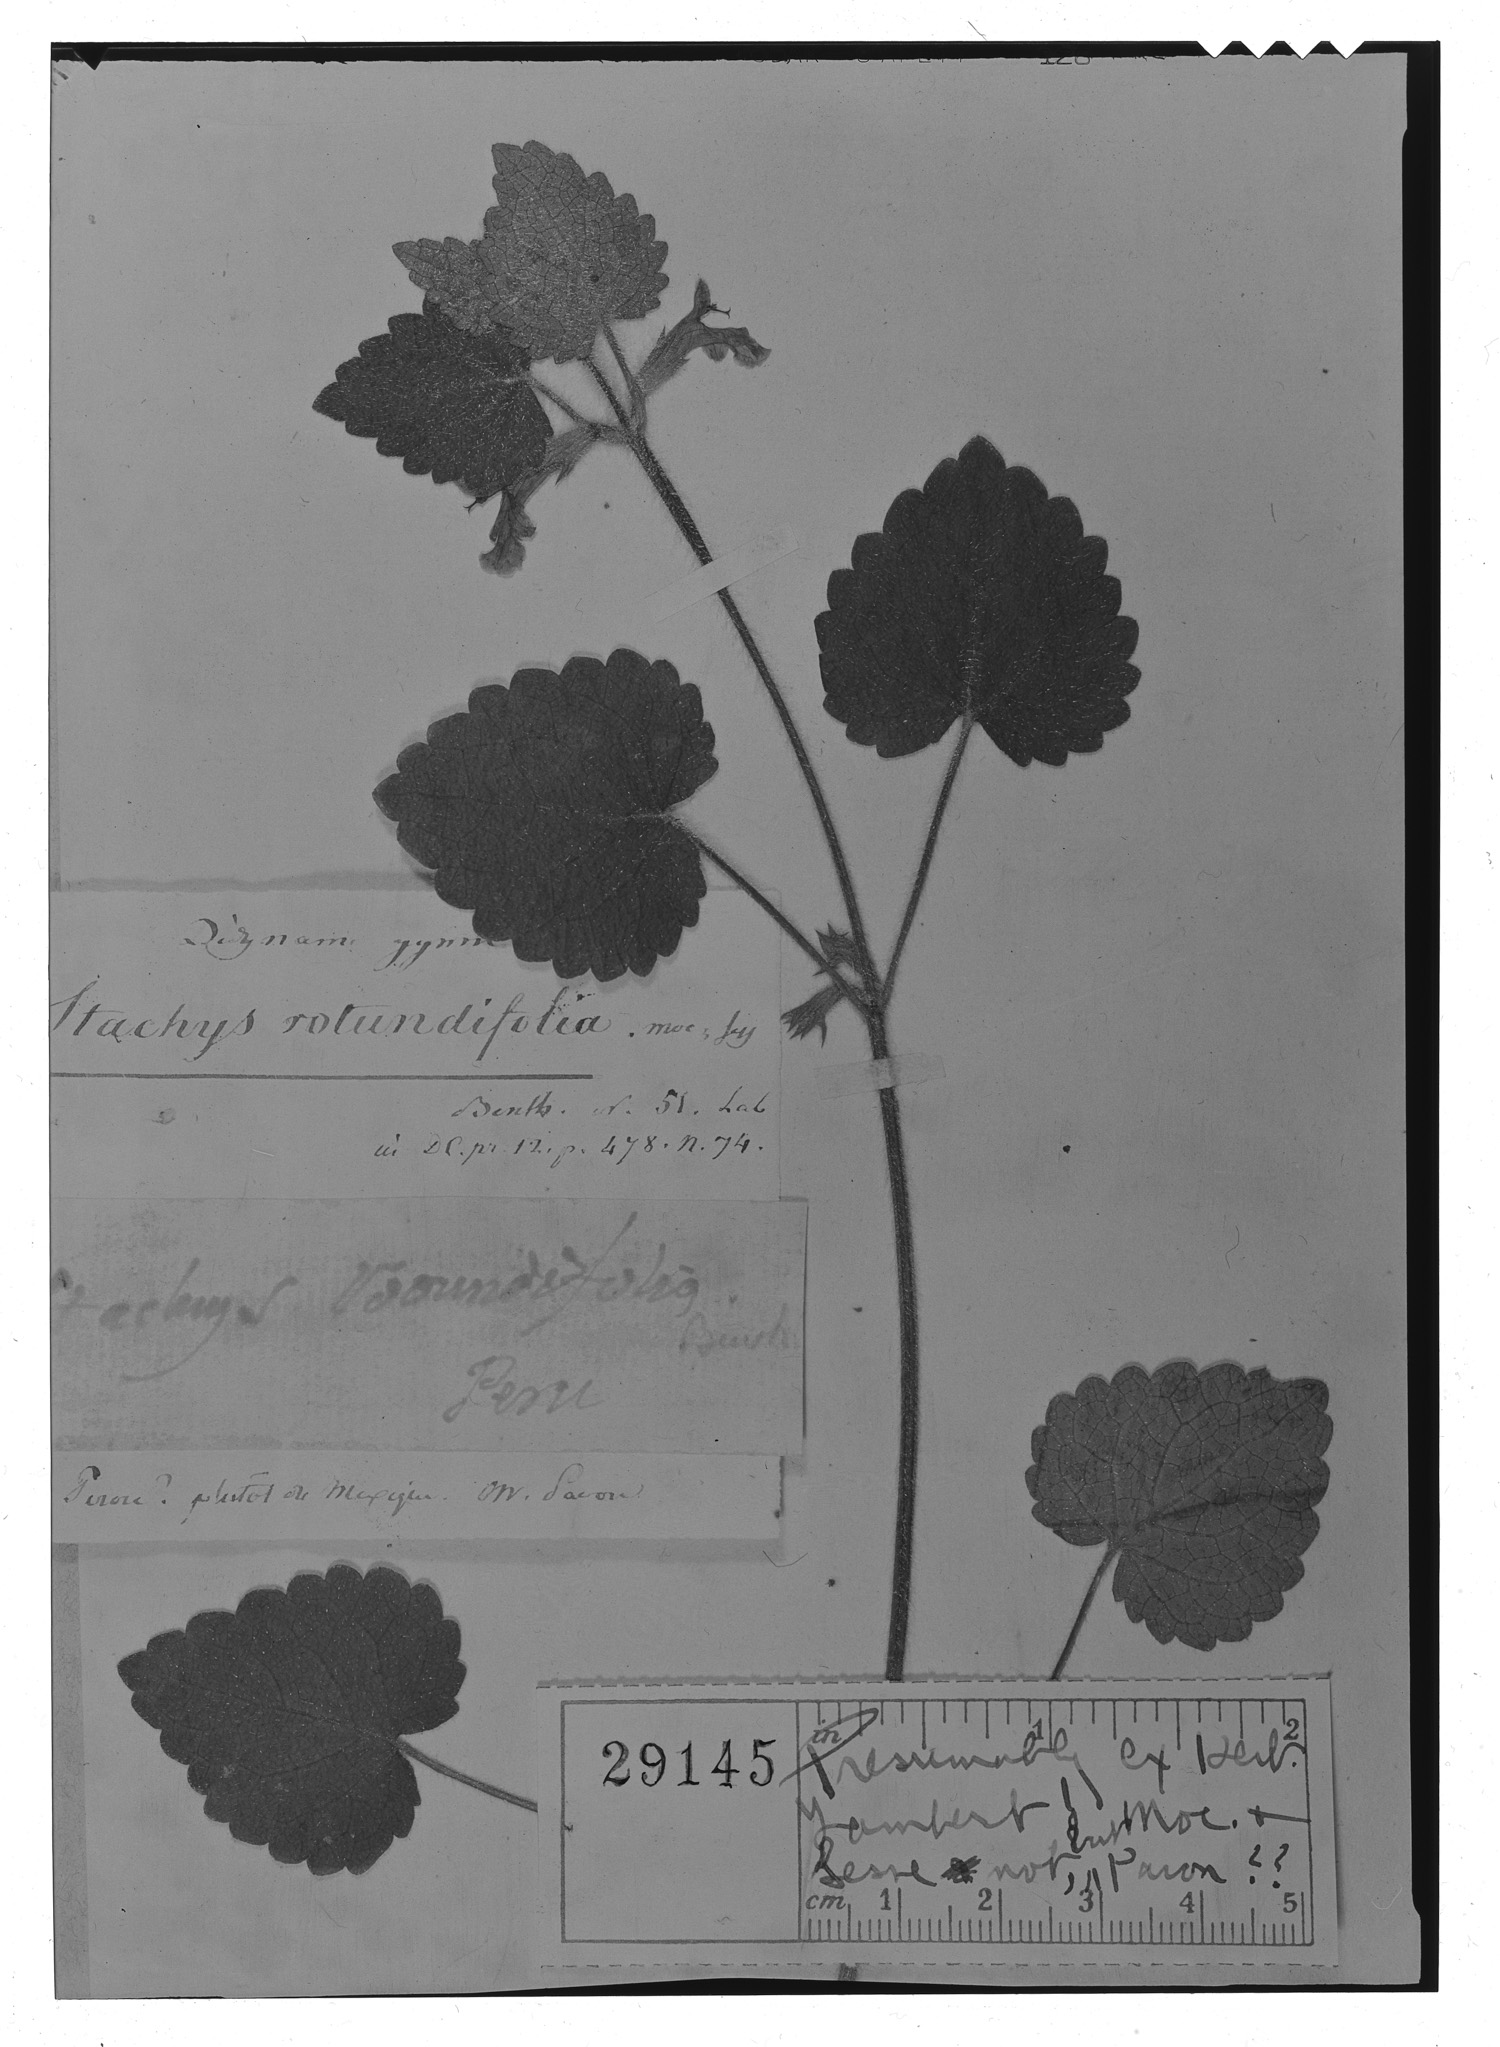 Stachys rotundifolia image